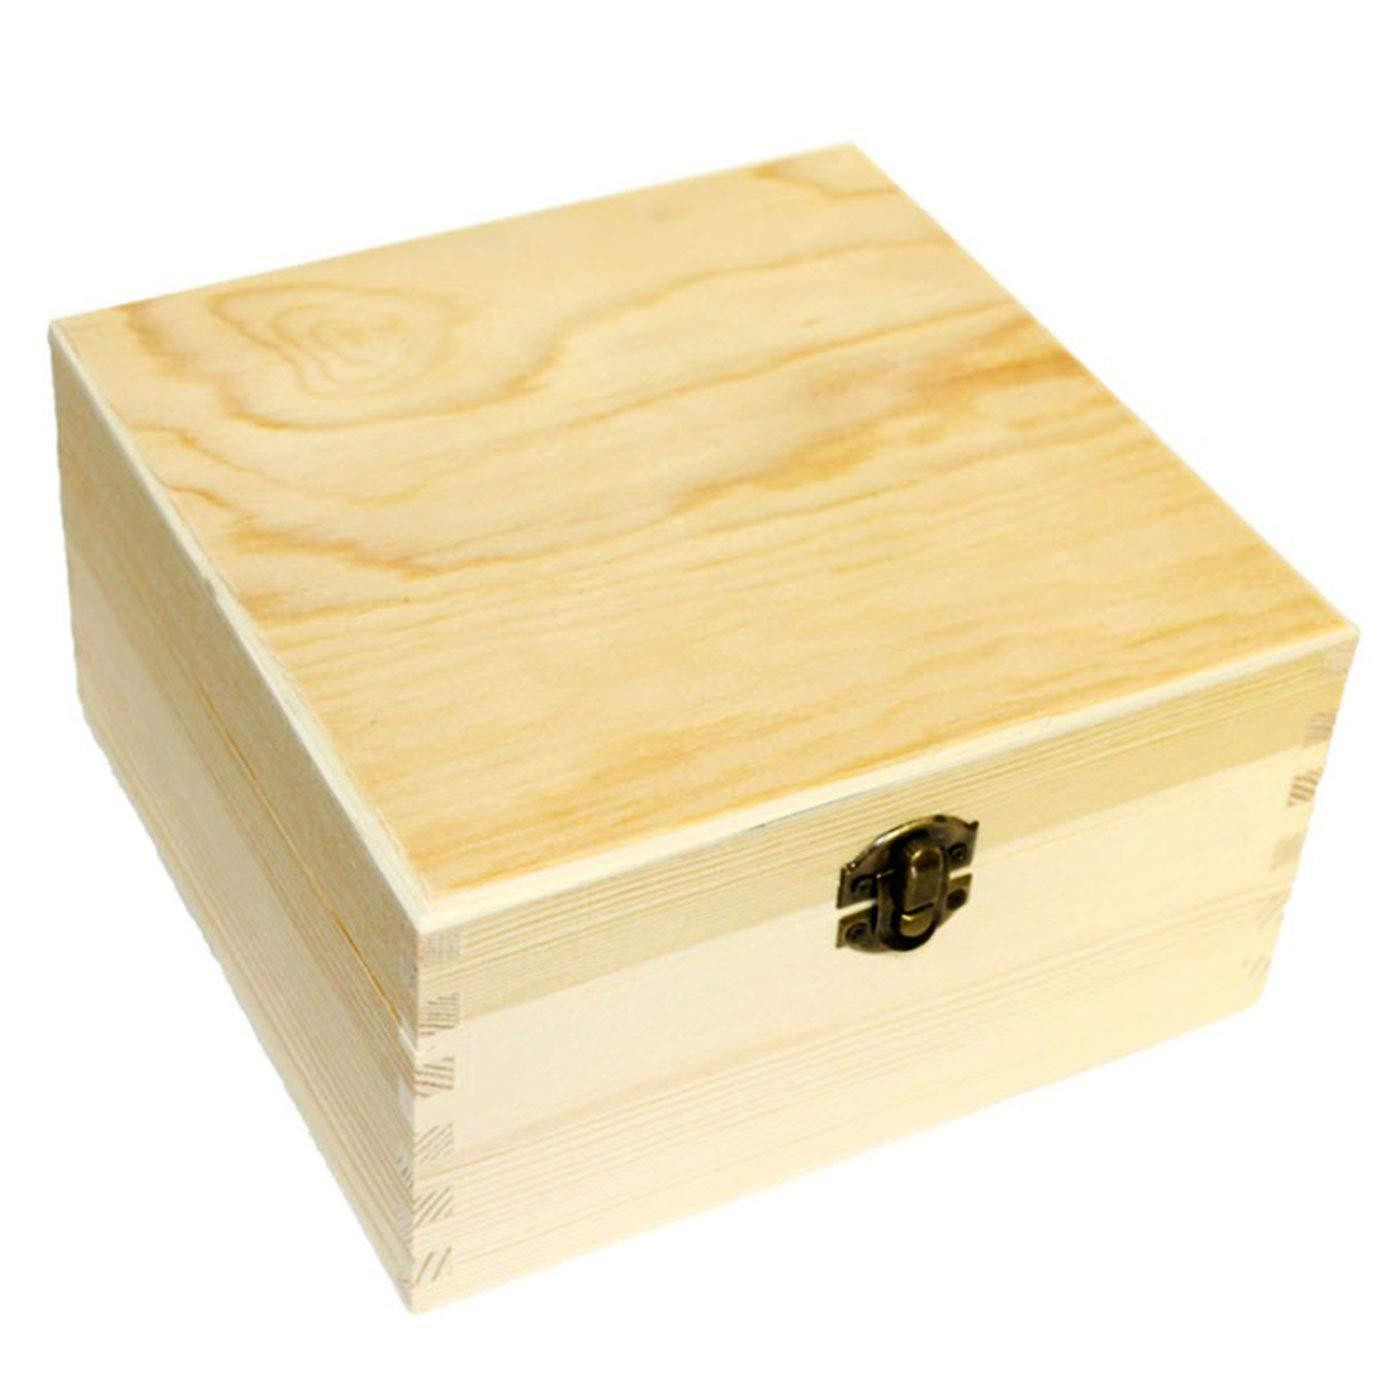 Caja de madera rectangular, tapa con esquinas redondeadas, cierre metálico,  cajita, cofre decorativo, almacenaje objetos, joyas